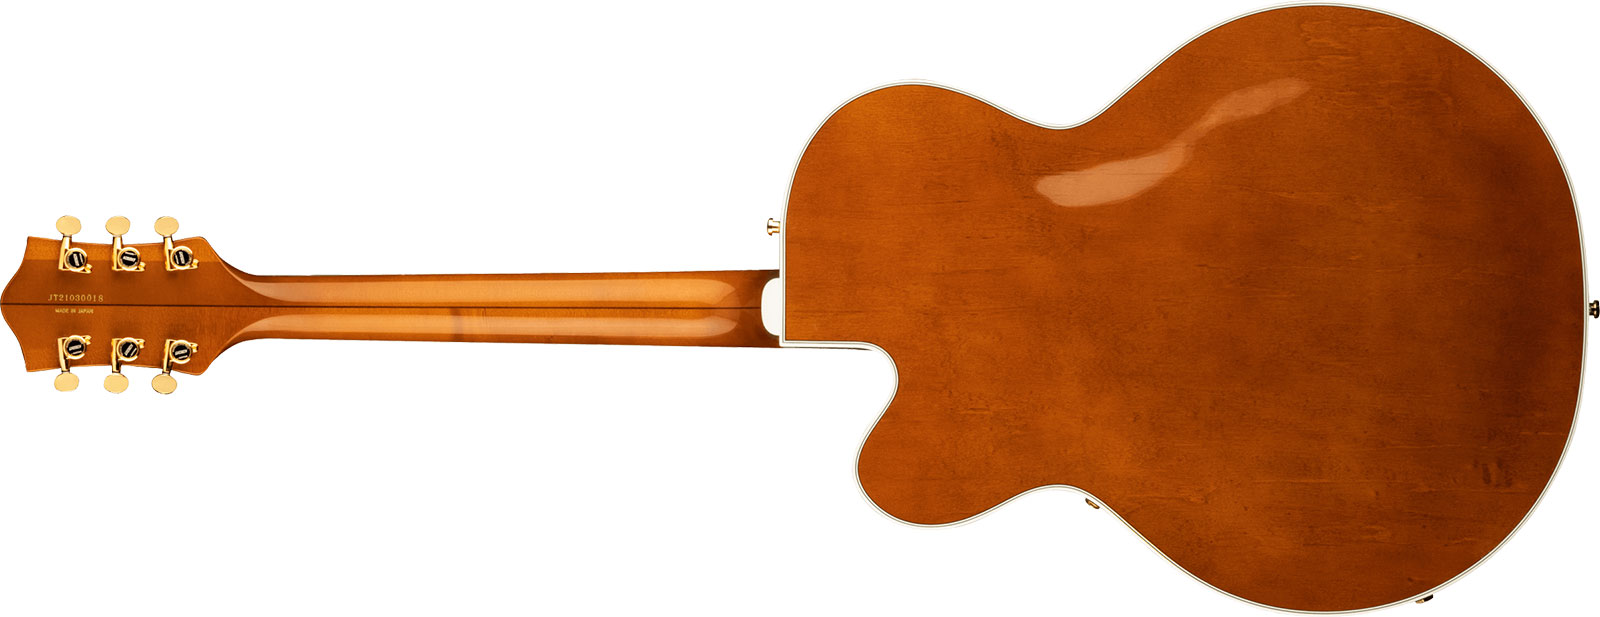 Gretsch G6120tg-ds Players Edition Nashville Pro Jap Bigsby Eb - Roundup Orange - Semi-hollow electric guitar - Variation 1